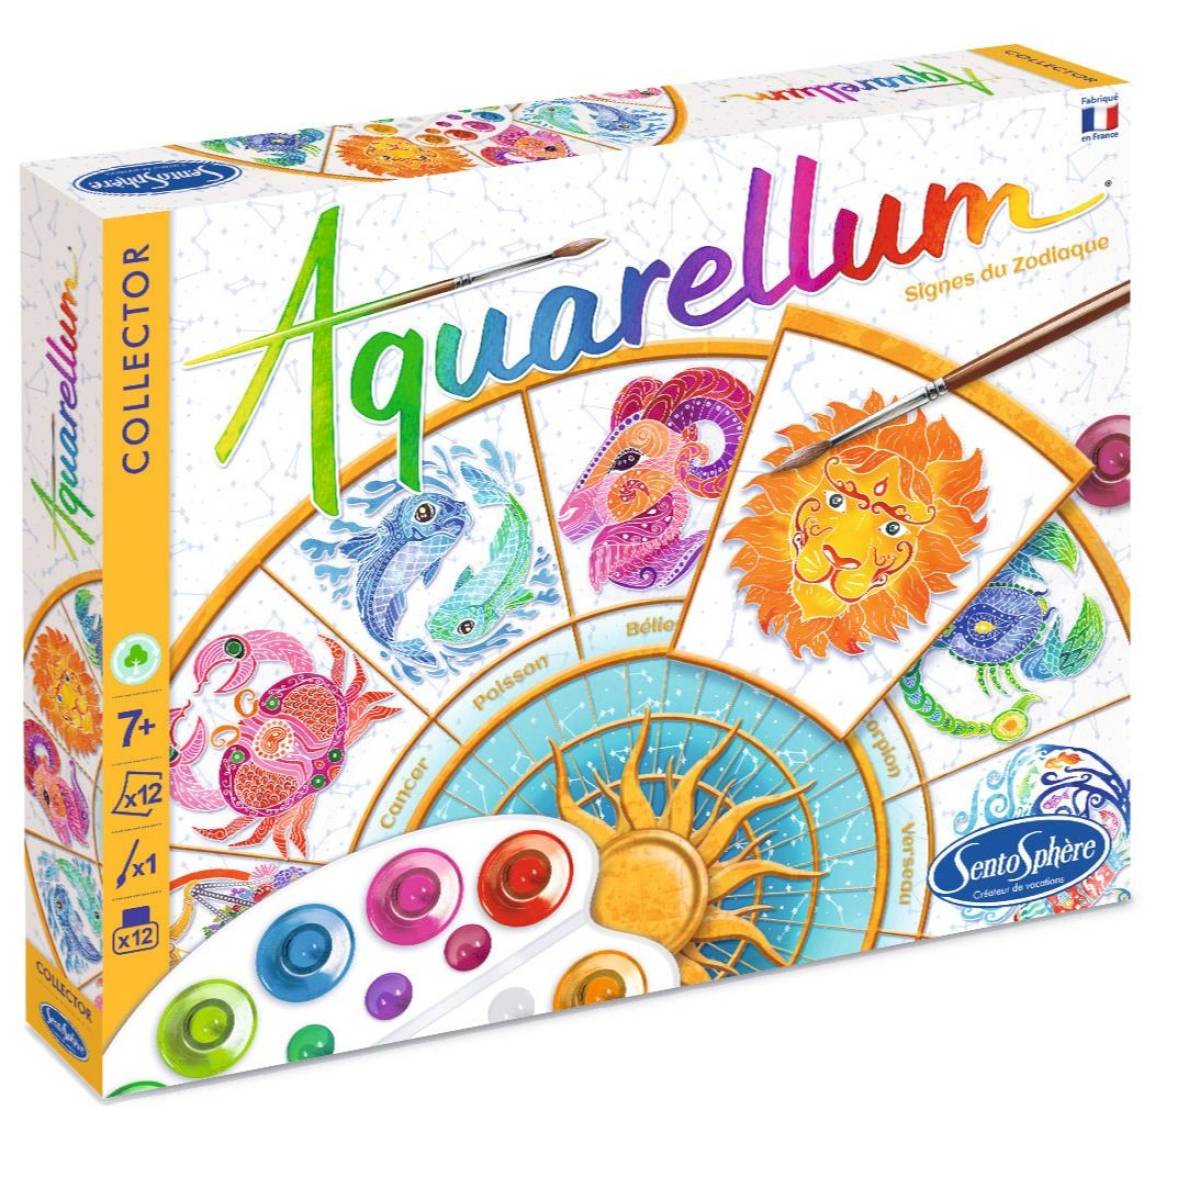 Jeu créatif Aquarellum - Licornes et pégases - Tableaux aquarellum